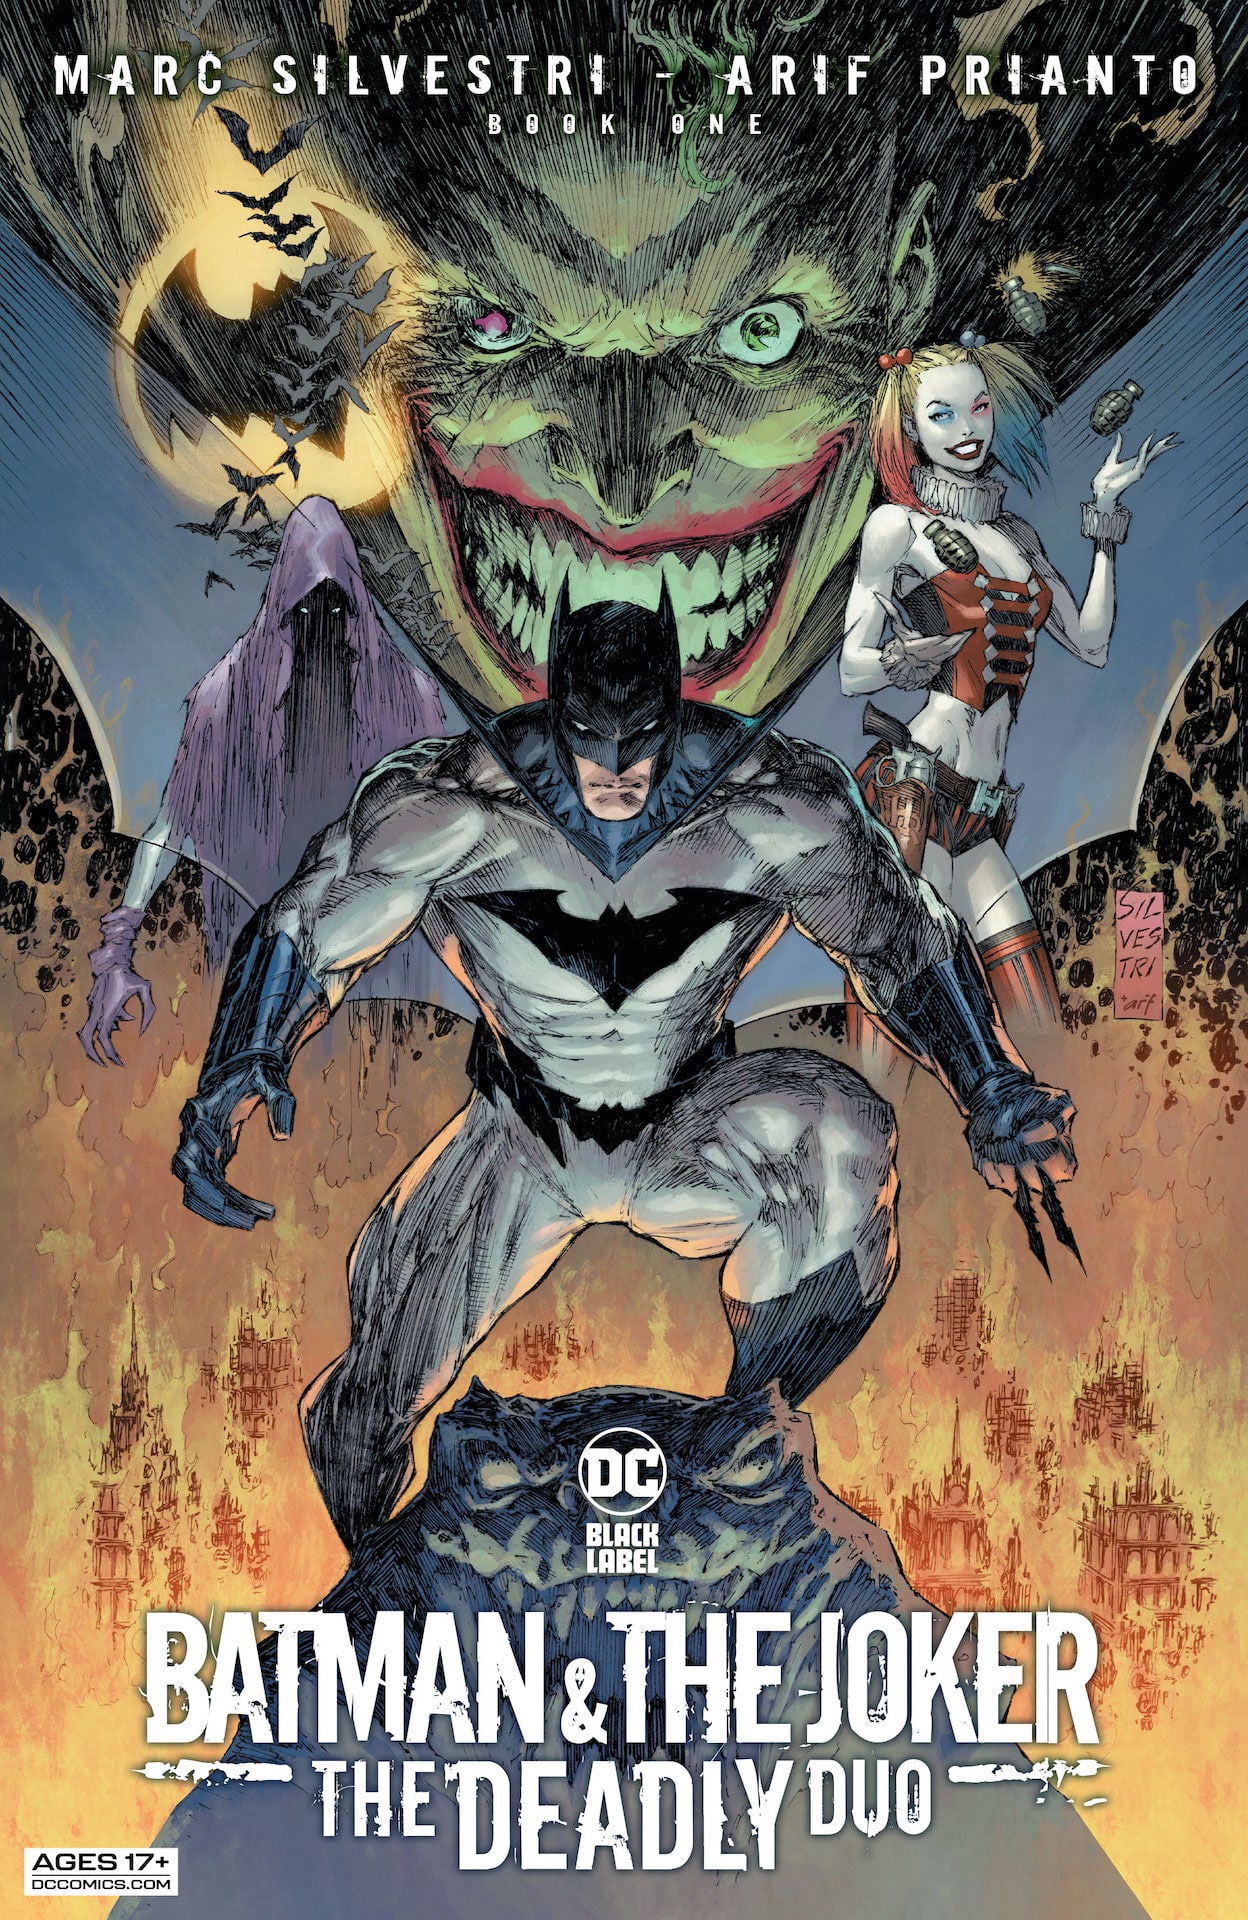 DC Preview: Batman & The Joker: The Deadly Duo #1